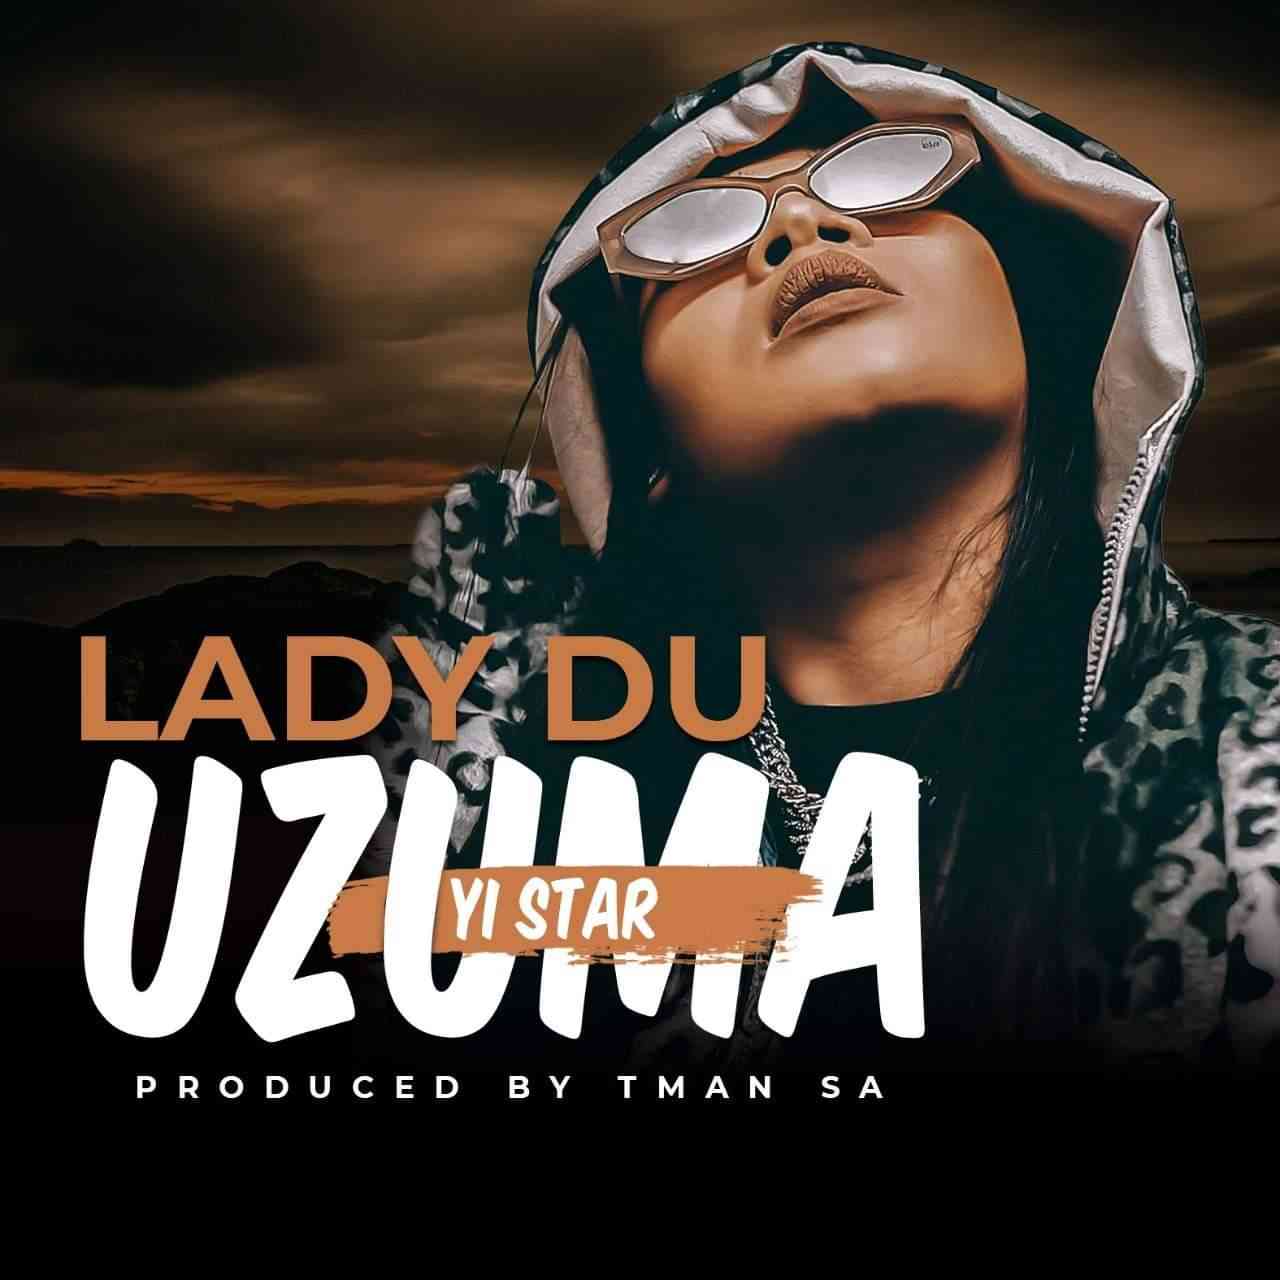 Lady Du uZuma Yi Star